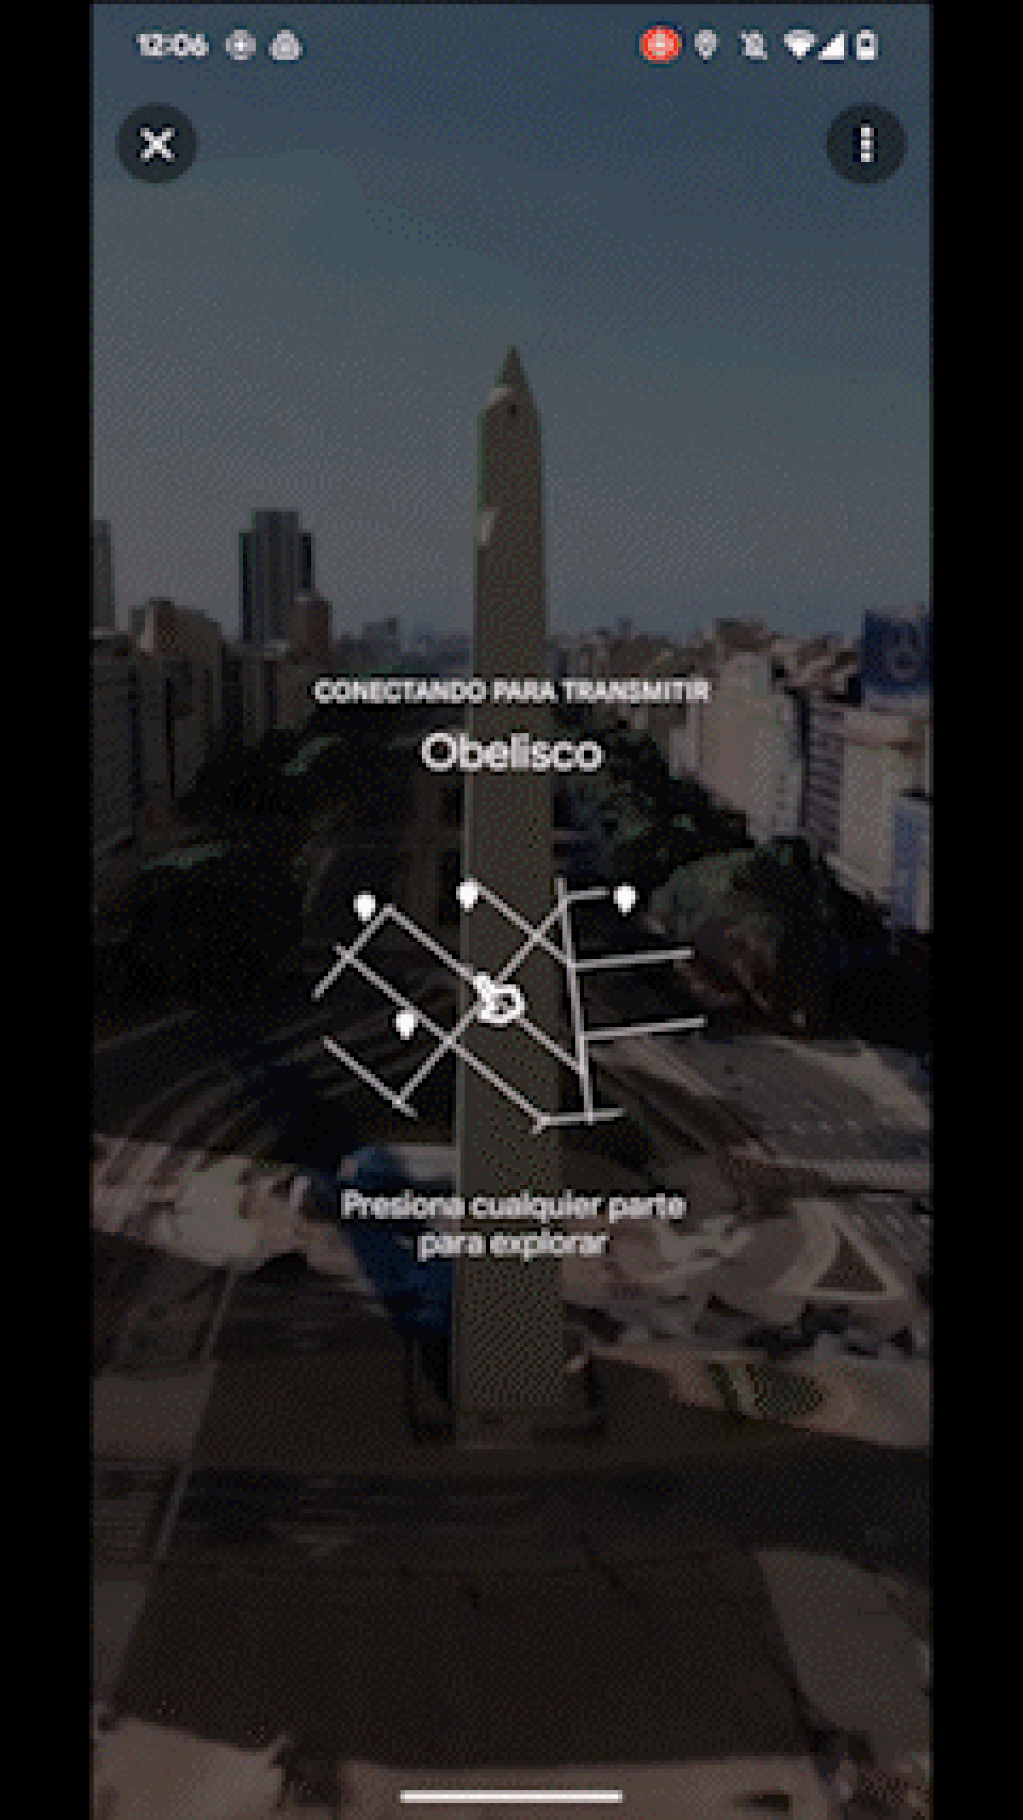 Obelisco "Vista Inmersiva" Google Maps